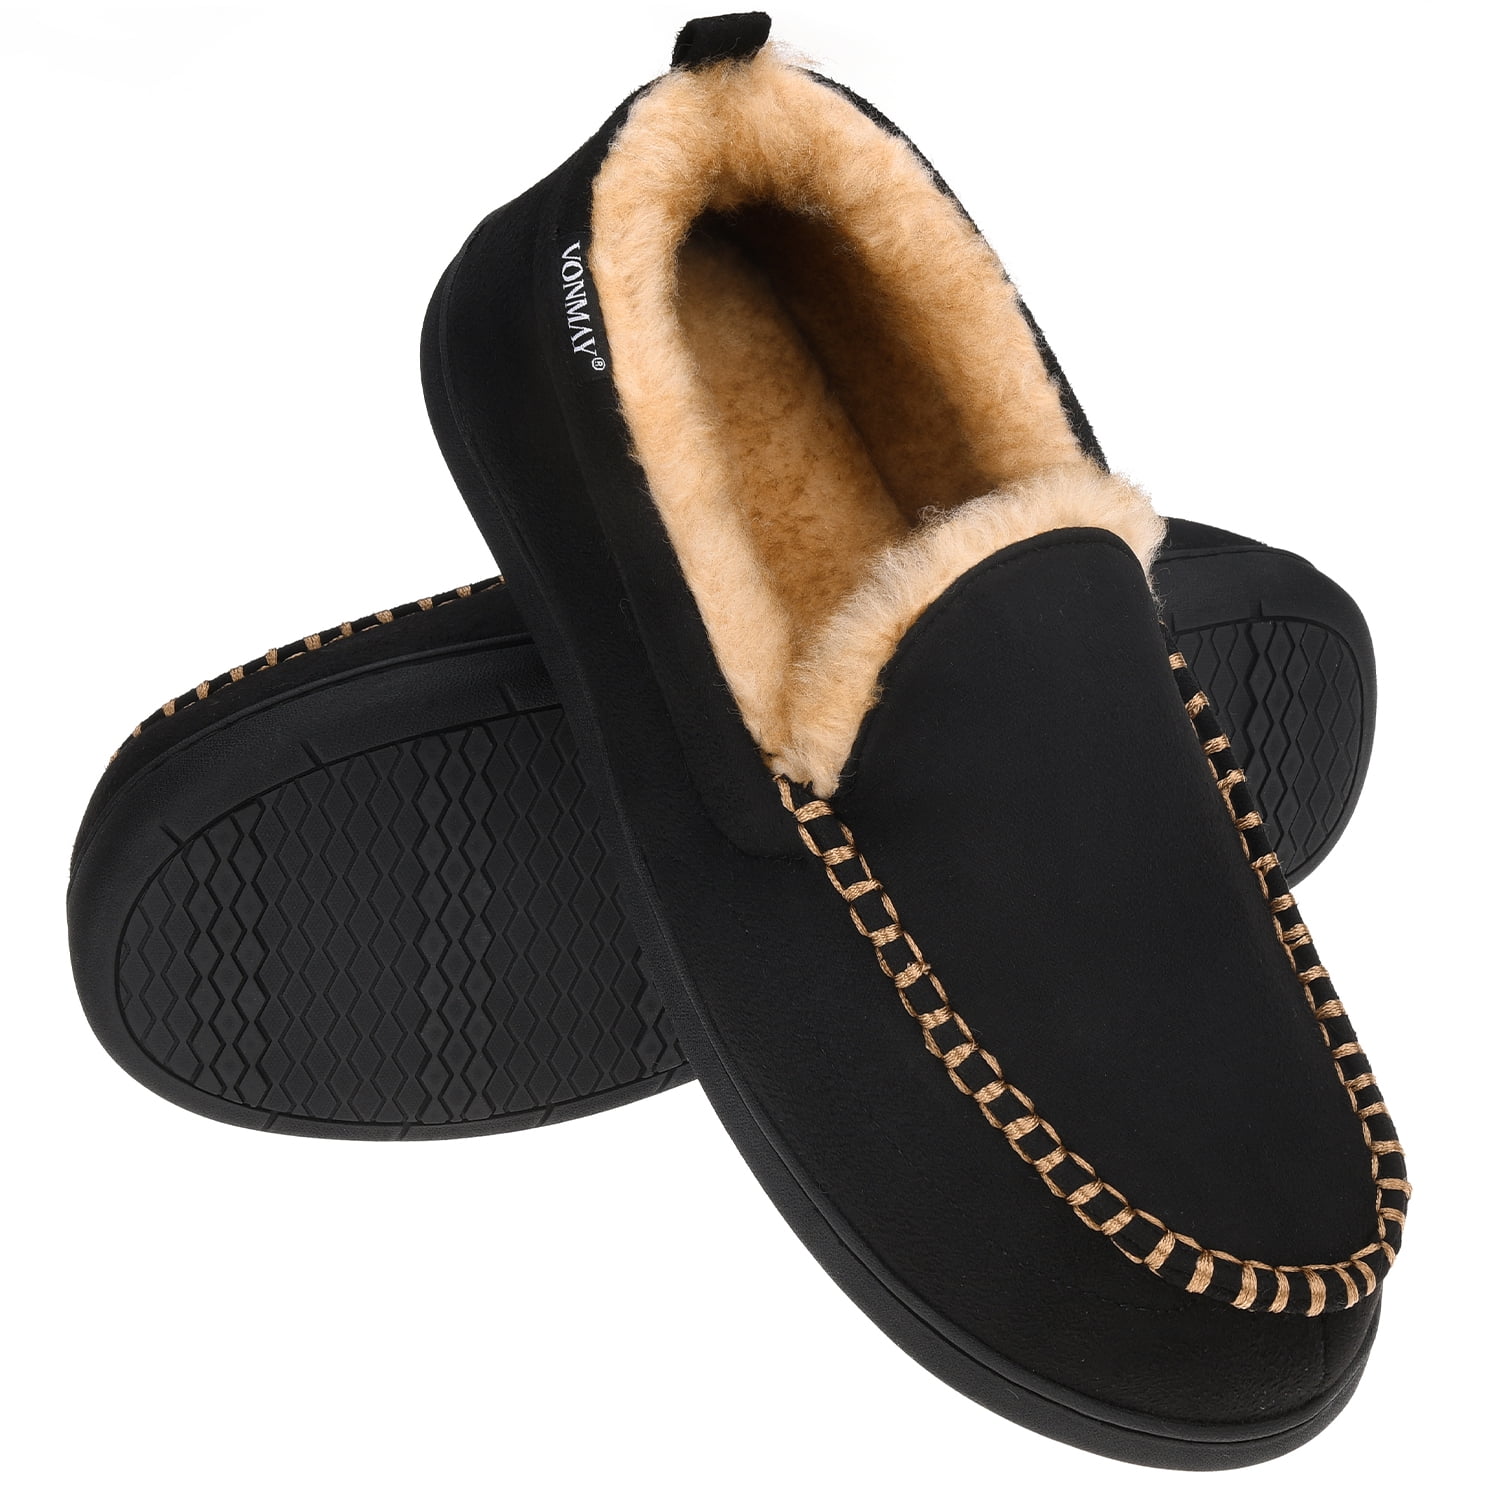 warm outdoor slippers